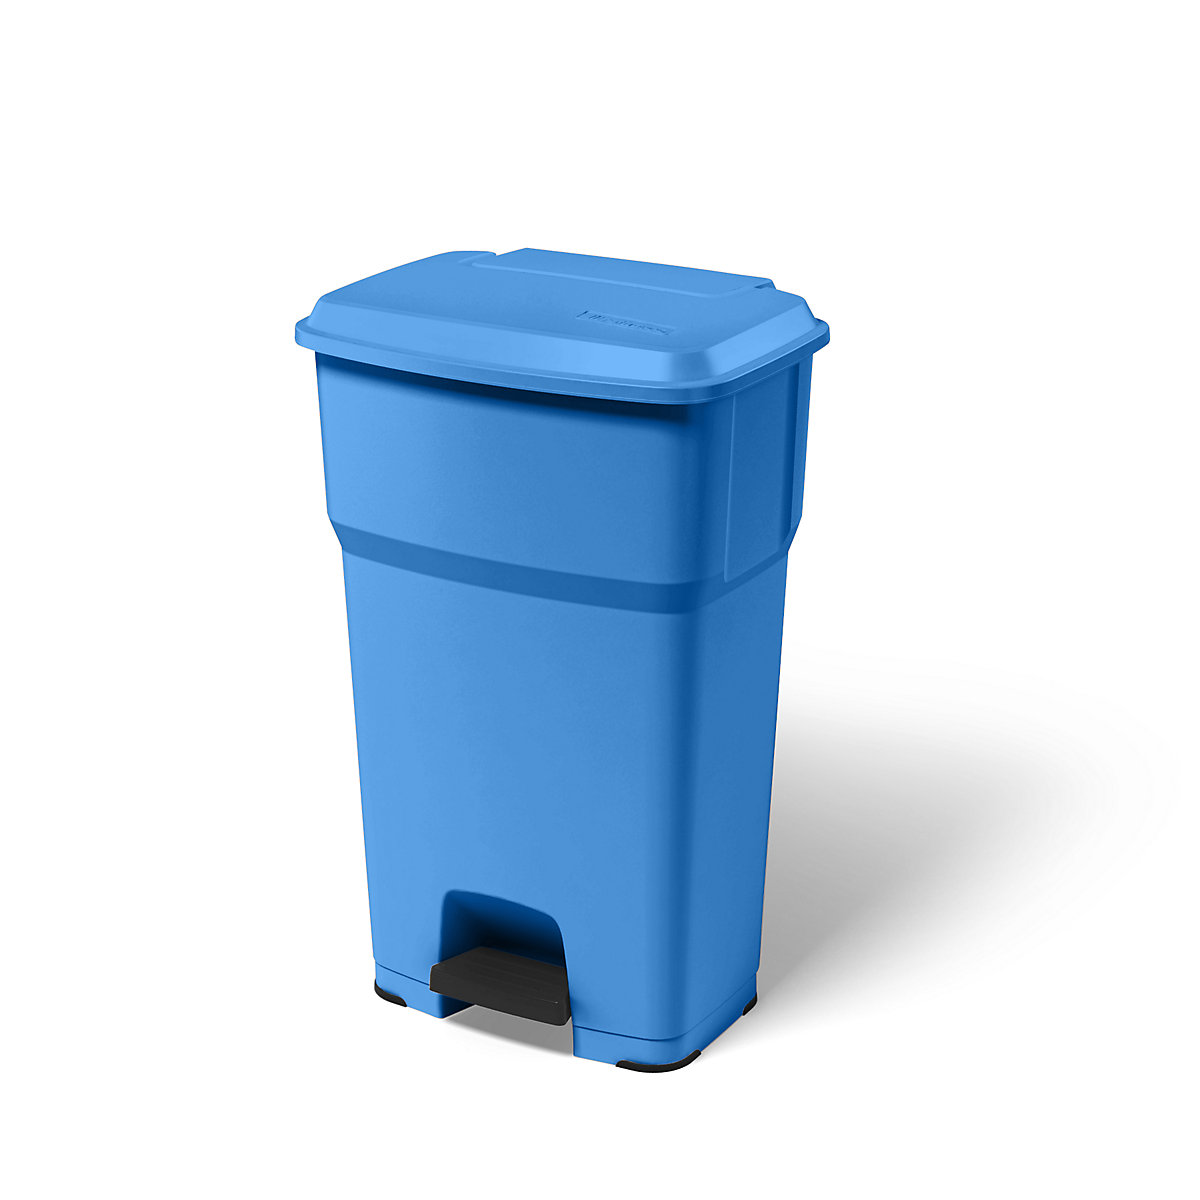 Spremnik za otpad s papučicom HERA – rothopro, volumen 85 l, ŠxVxD 490 x 790 x 390 mm, u plavoj boji-9